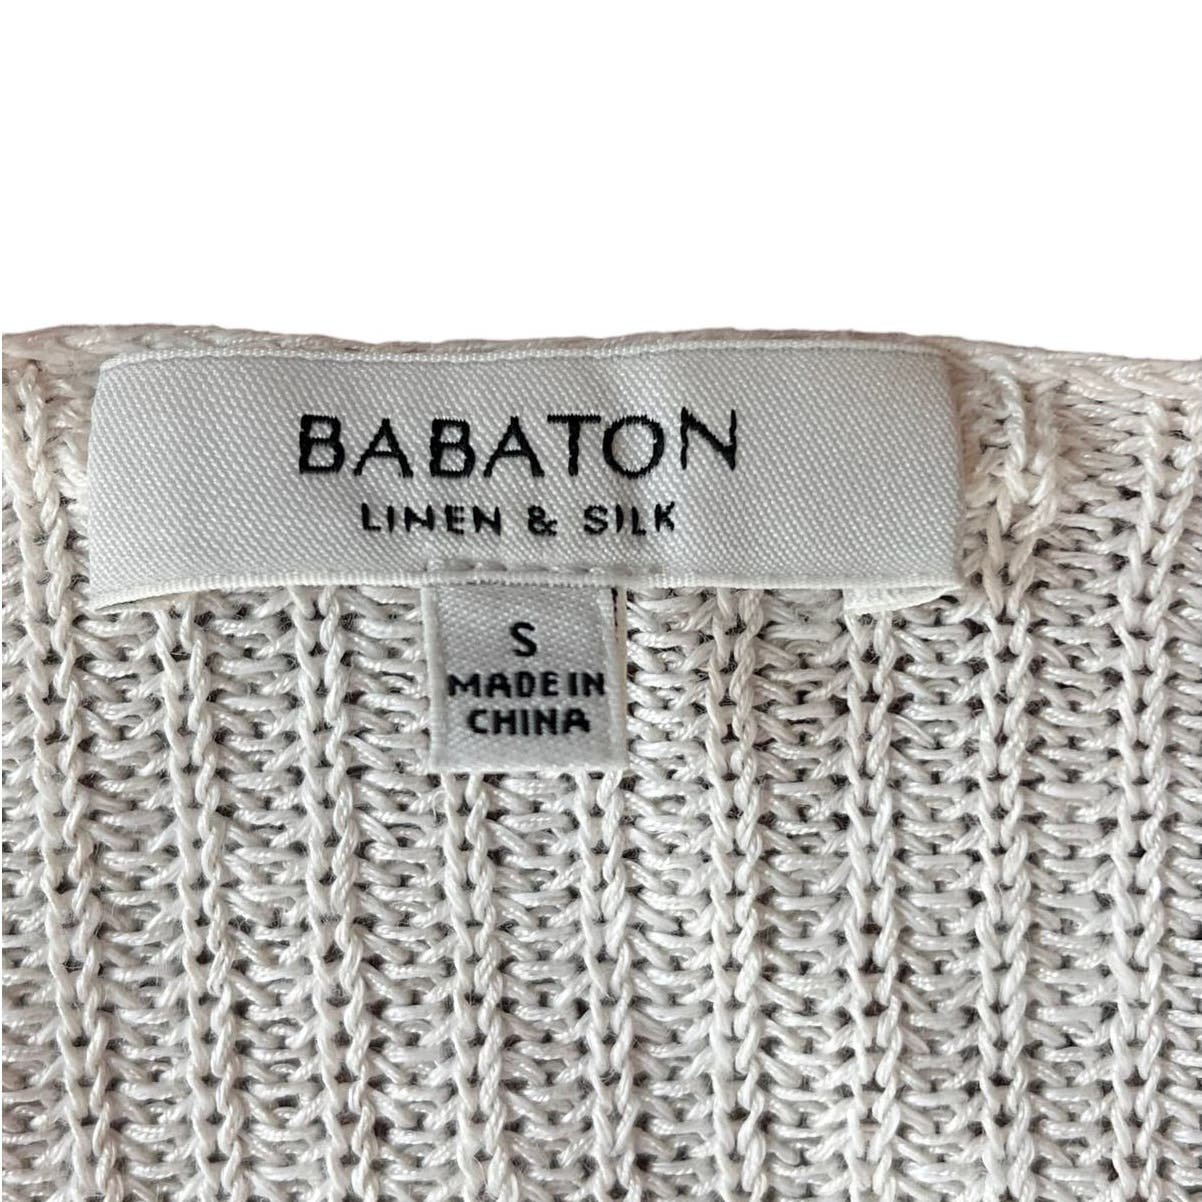 Great Babaton Aritzia Linen & Silk Cream Sweater Size Small OJP2rOlsN Great